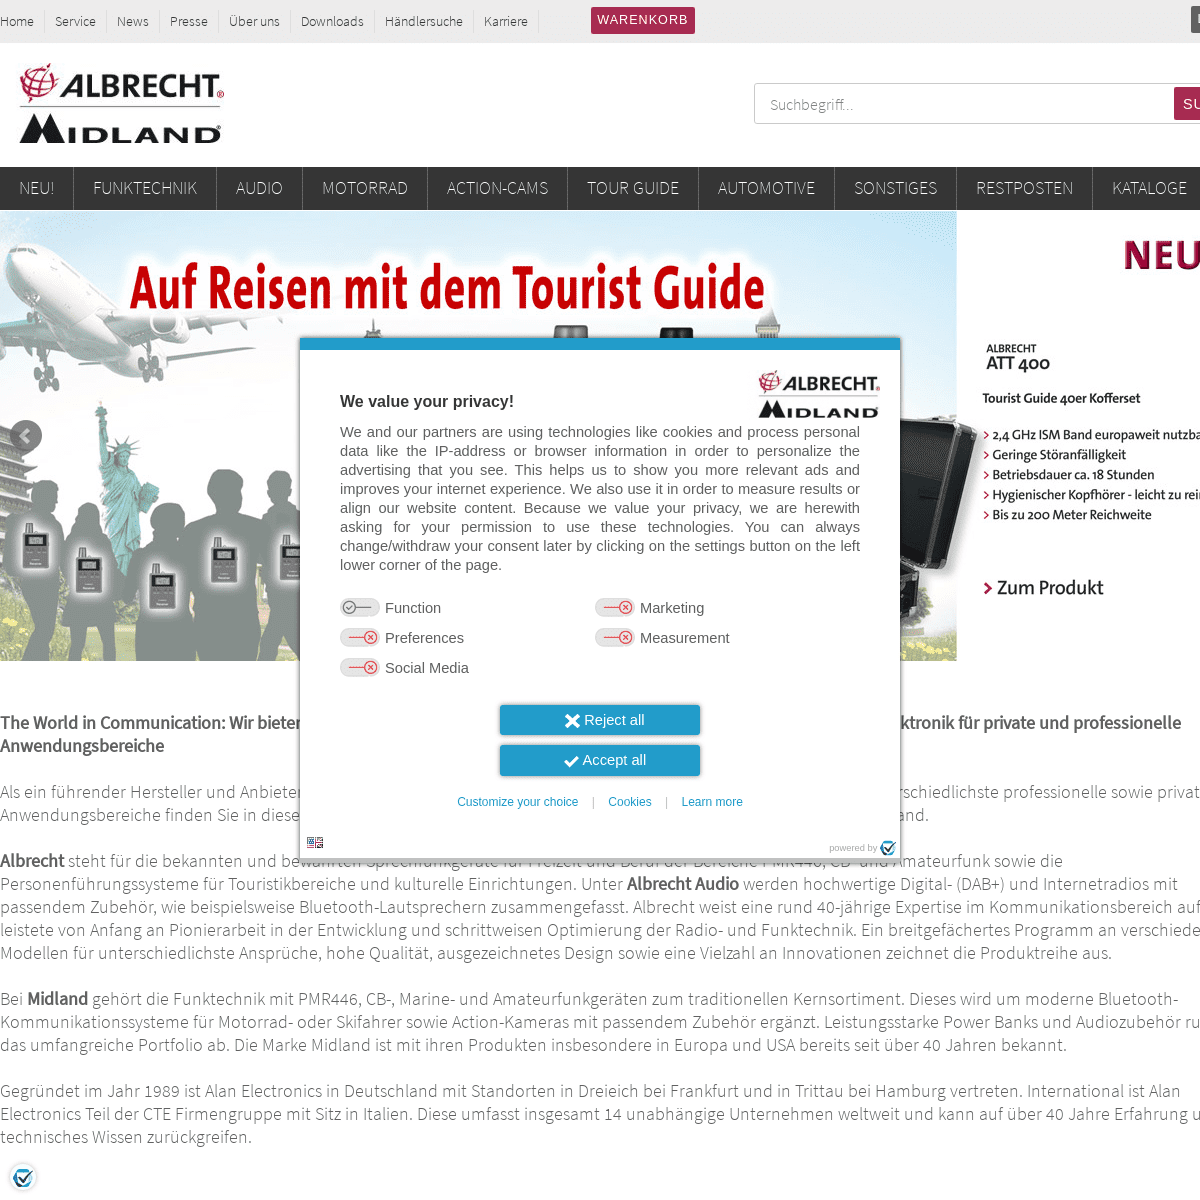 A complete backup of https://alan-electronics.de